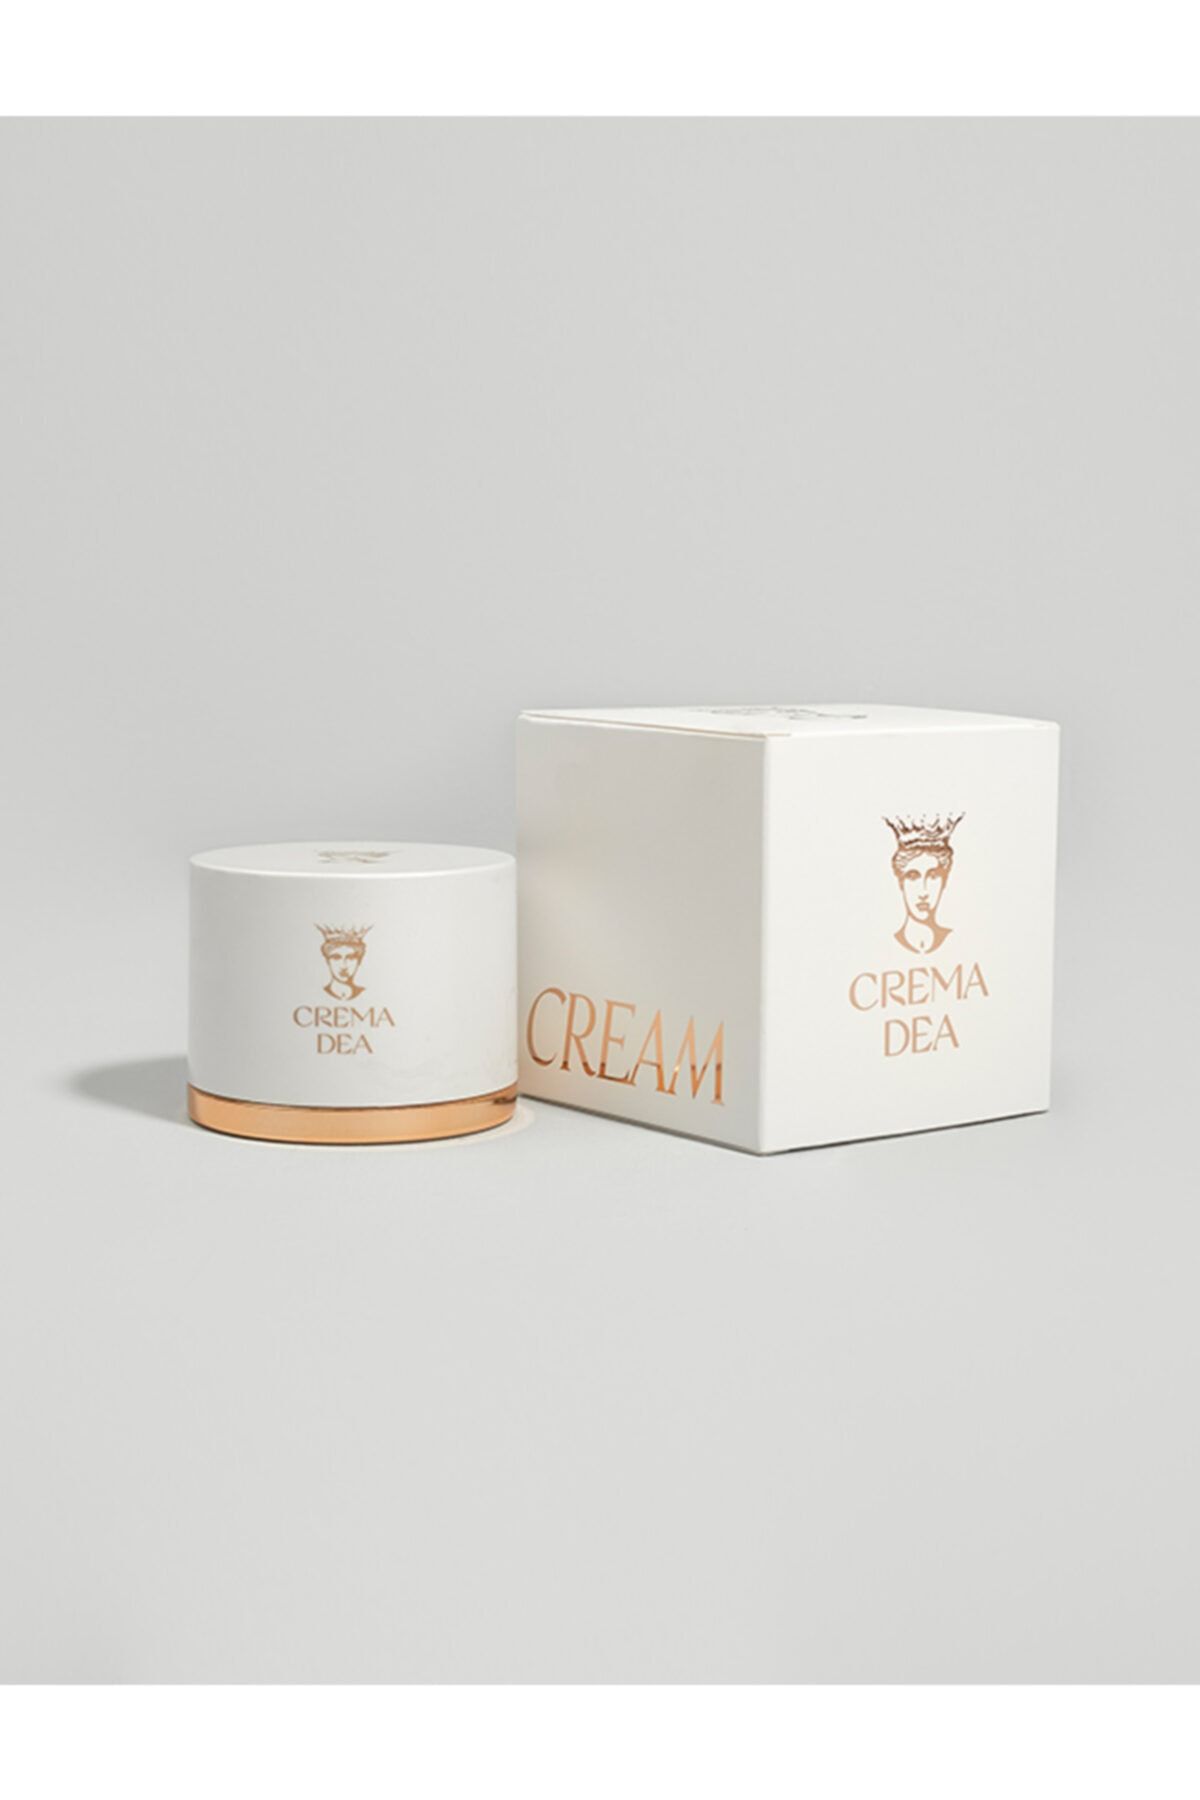 Crema Dea The Mythical Cream